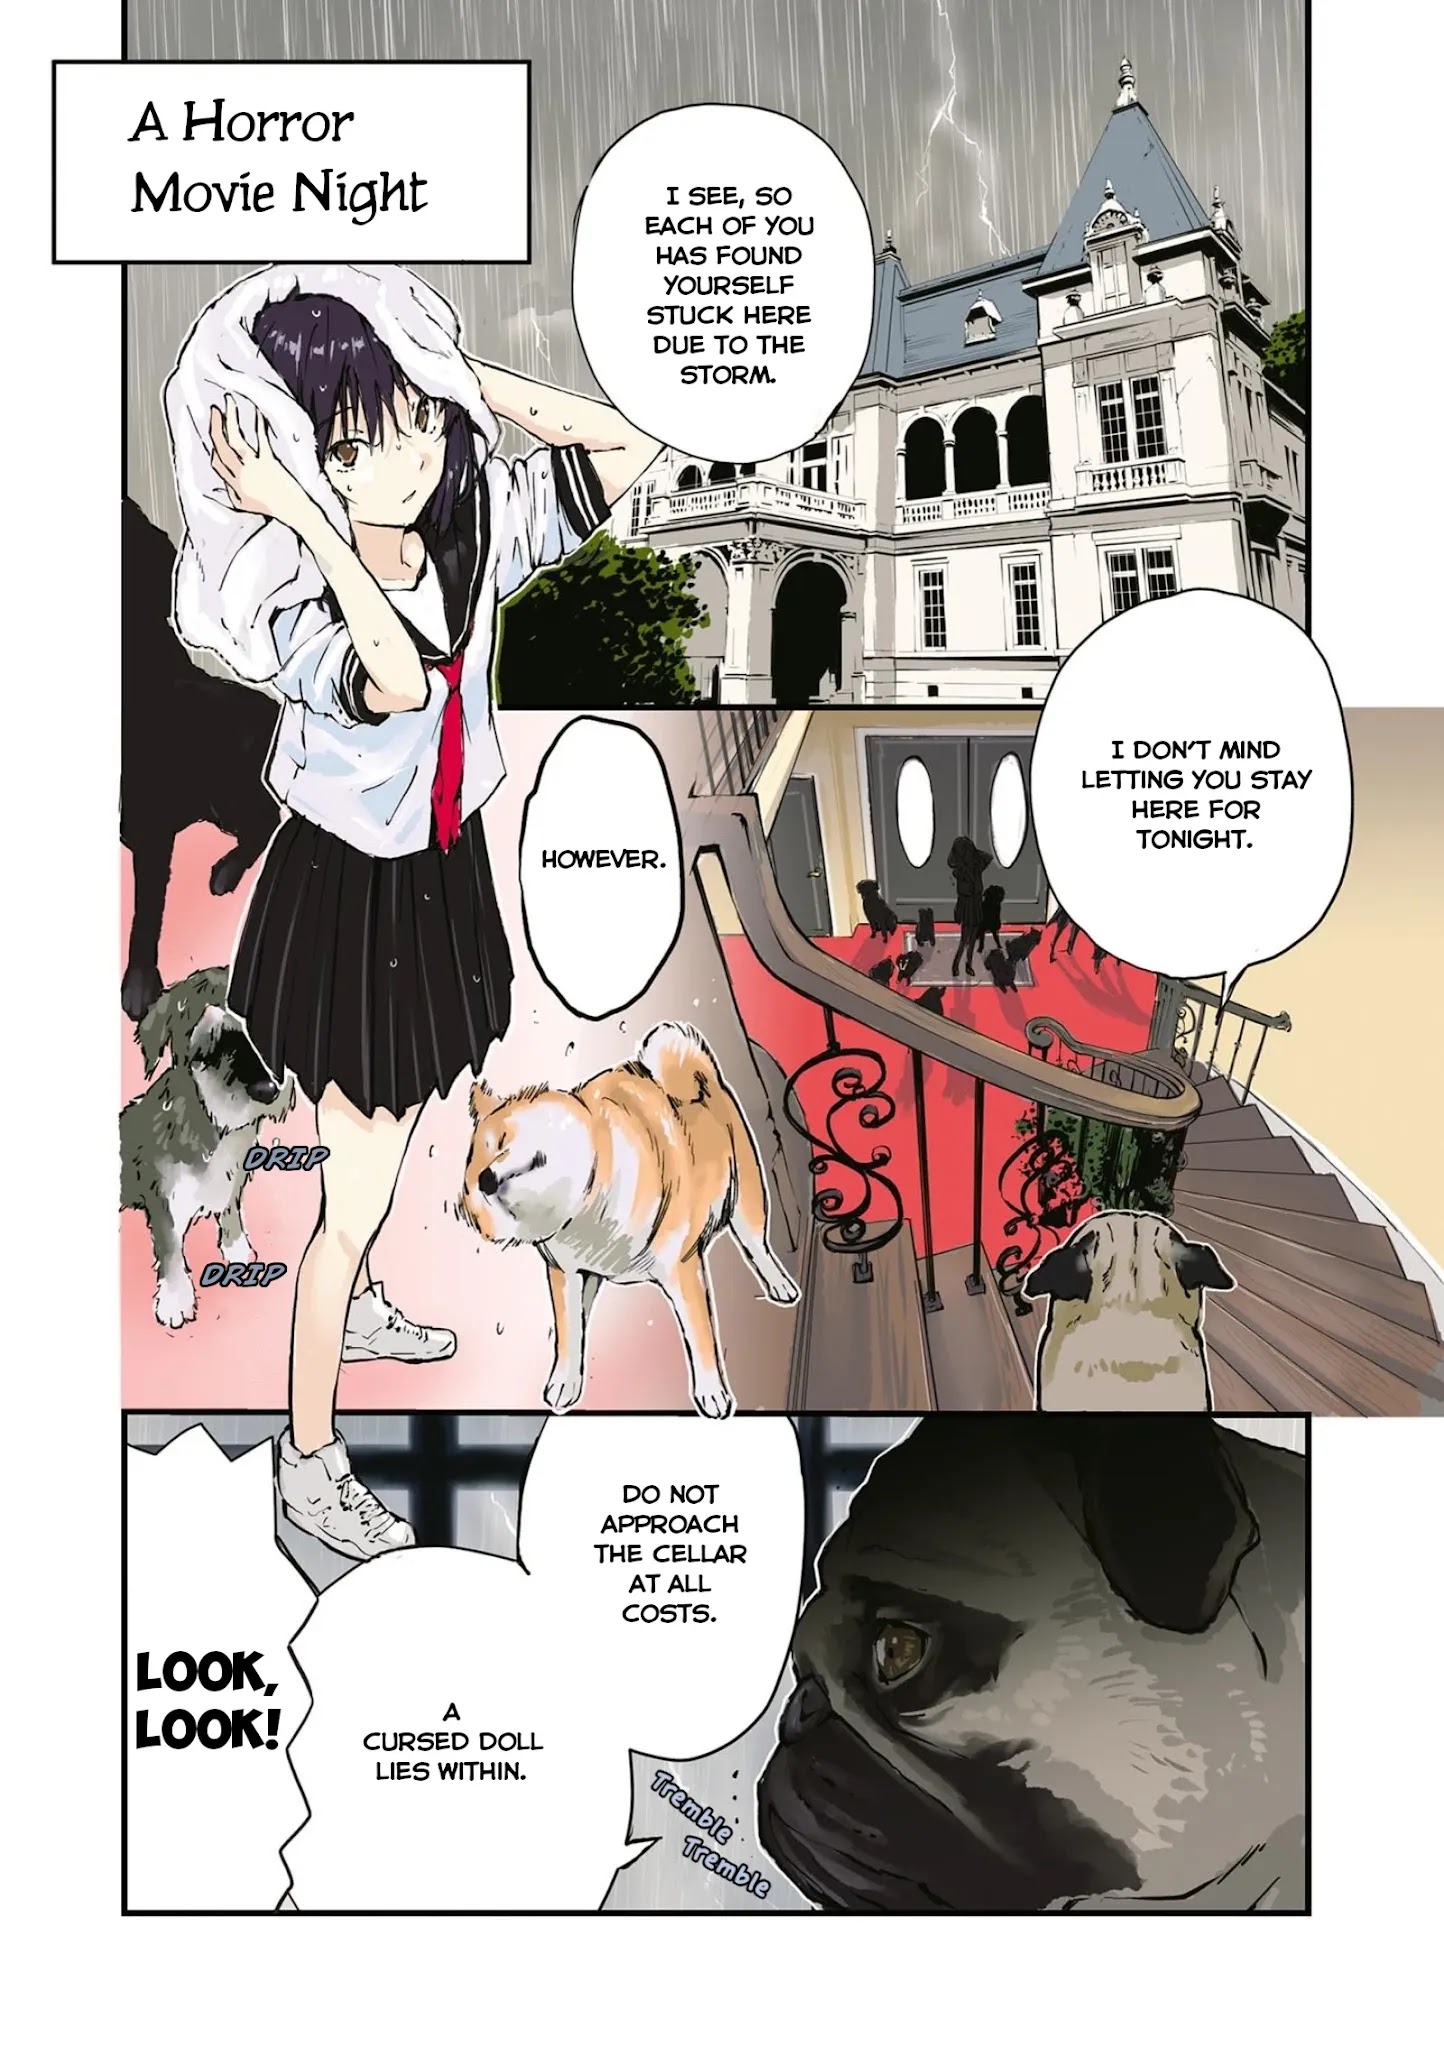 Roaming The Apocalypse With My Shiba Inu - Page 3